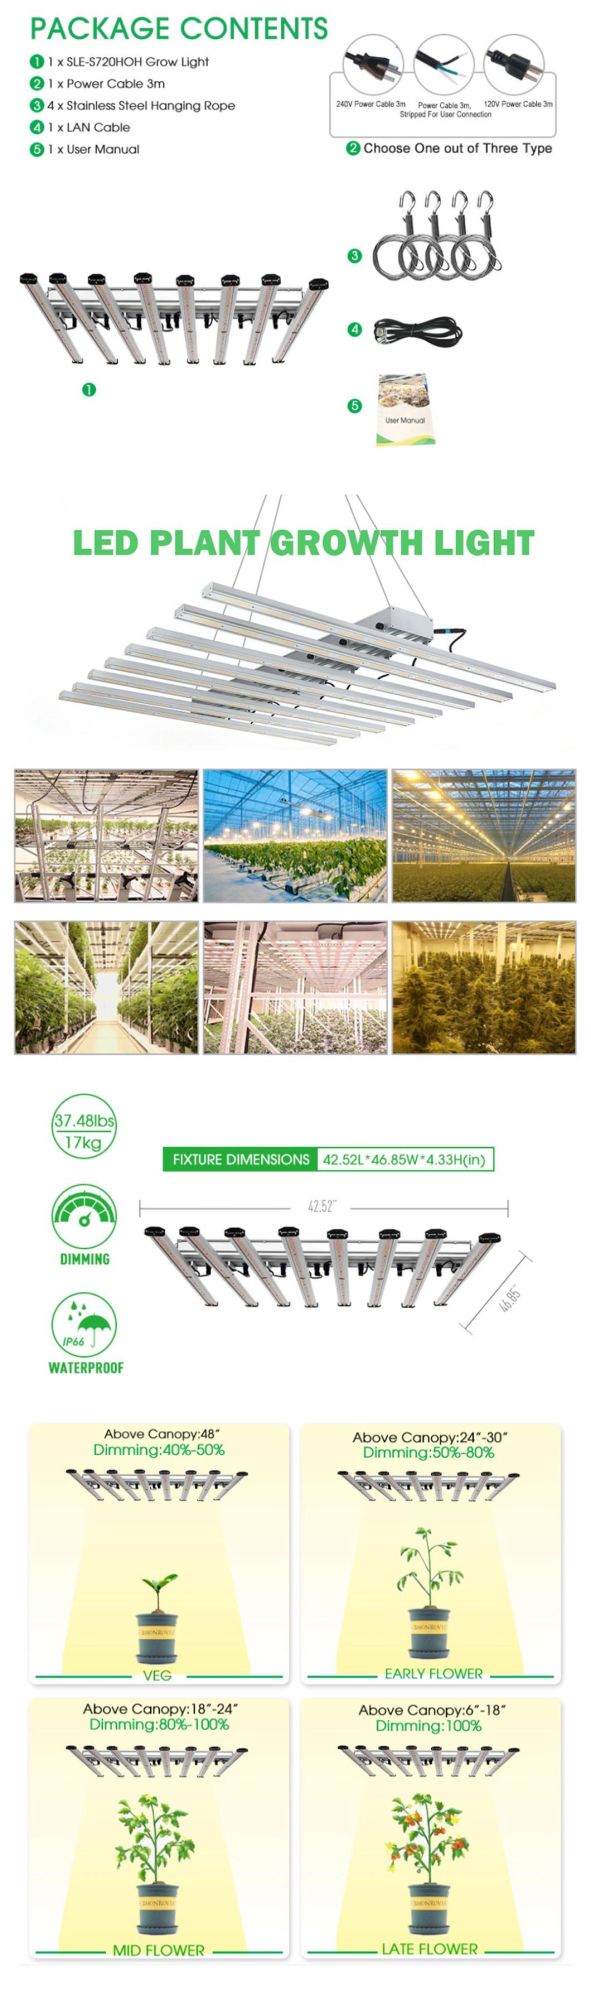 Full Spectrum LED Grow Light Work Light for Greenhouse Veg and Fruits Medical Plant Growth